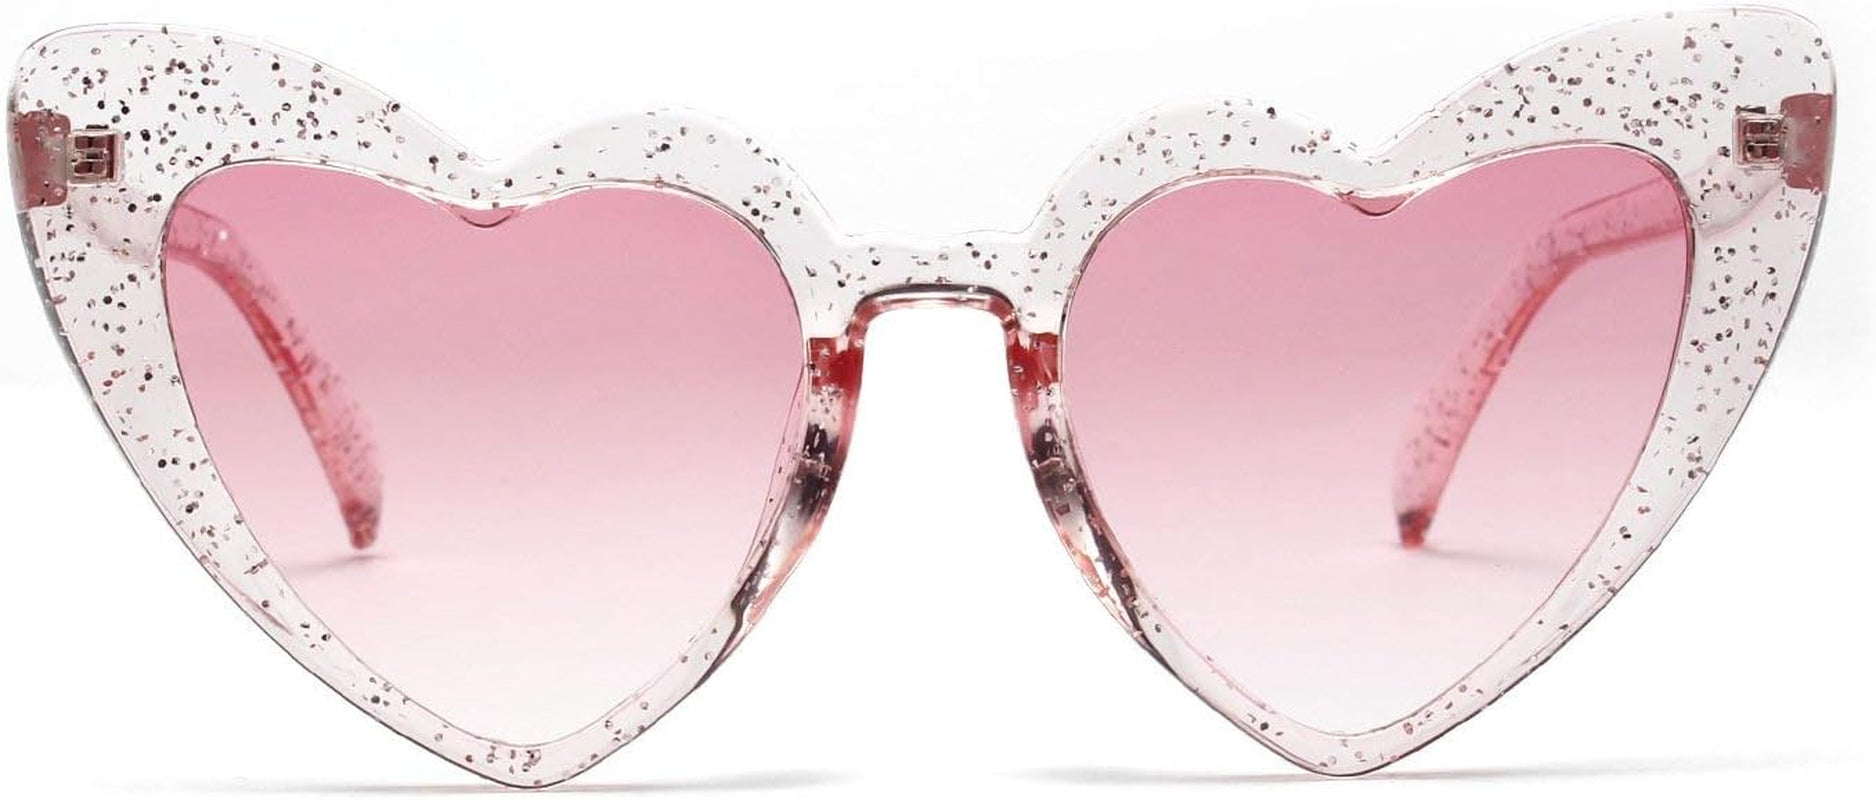 Clout Heart Shaped Sunglasses Goggles Vintage Cat Eye Mod Style Retro Kurt Cobain Glasses